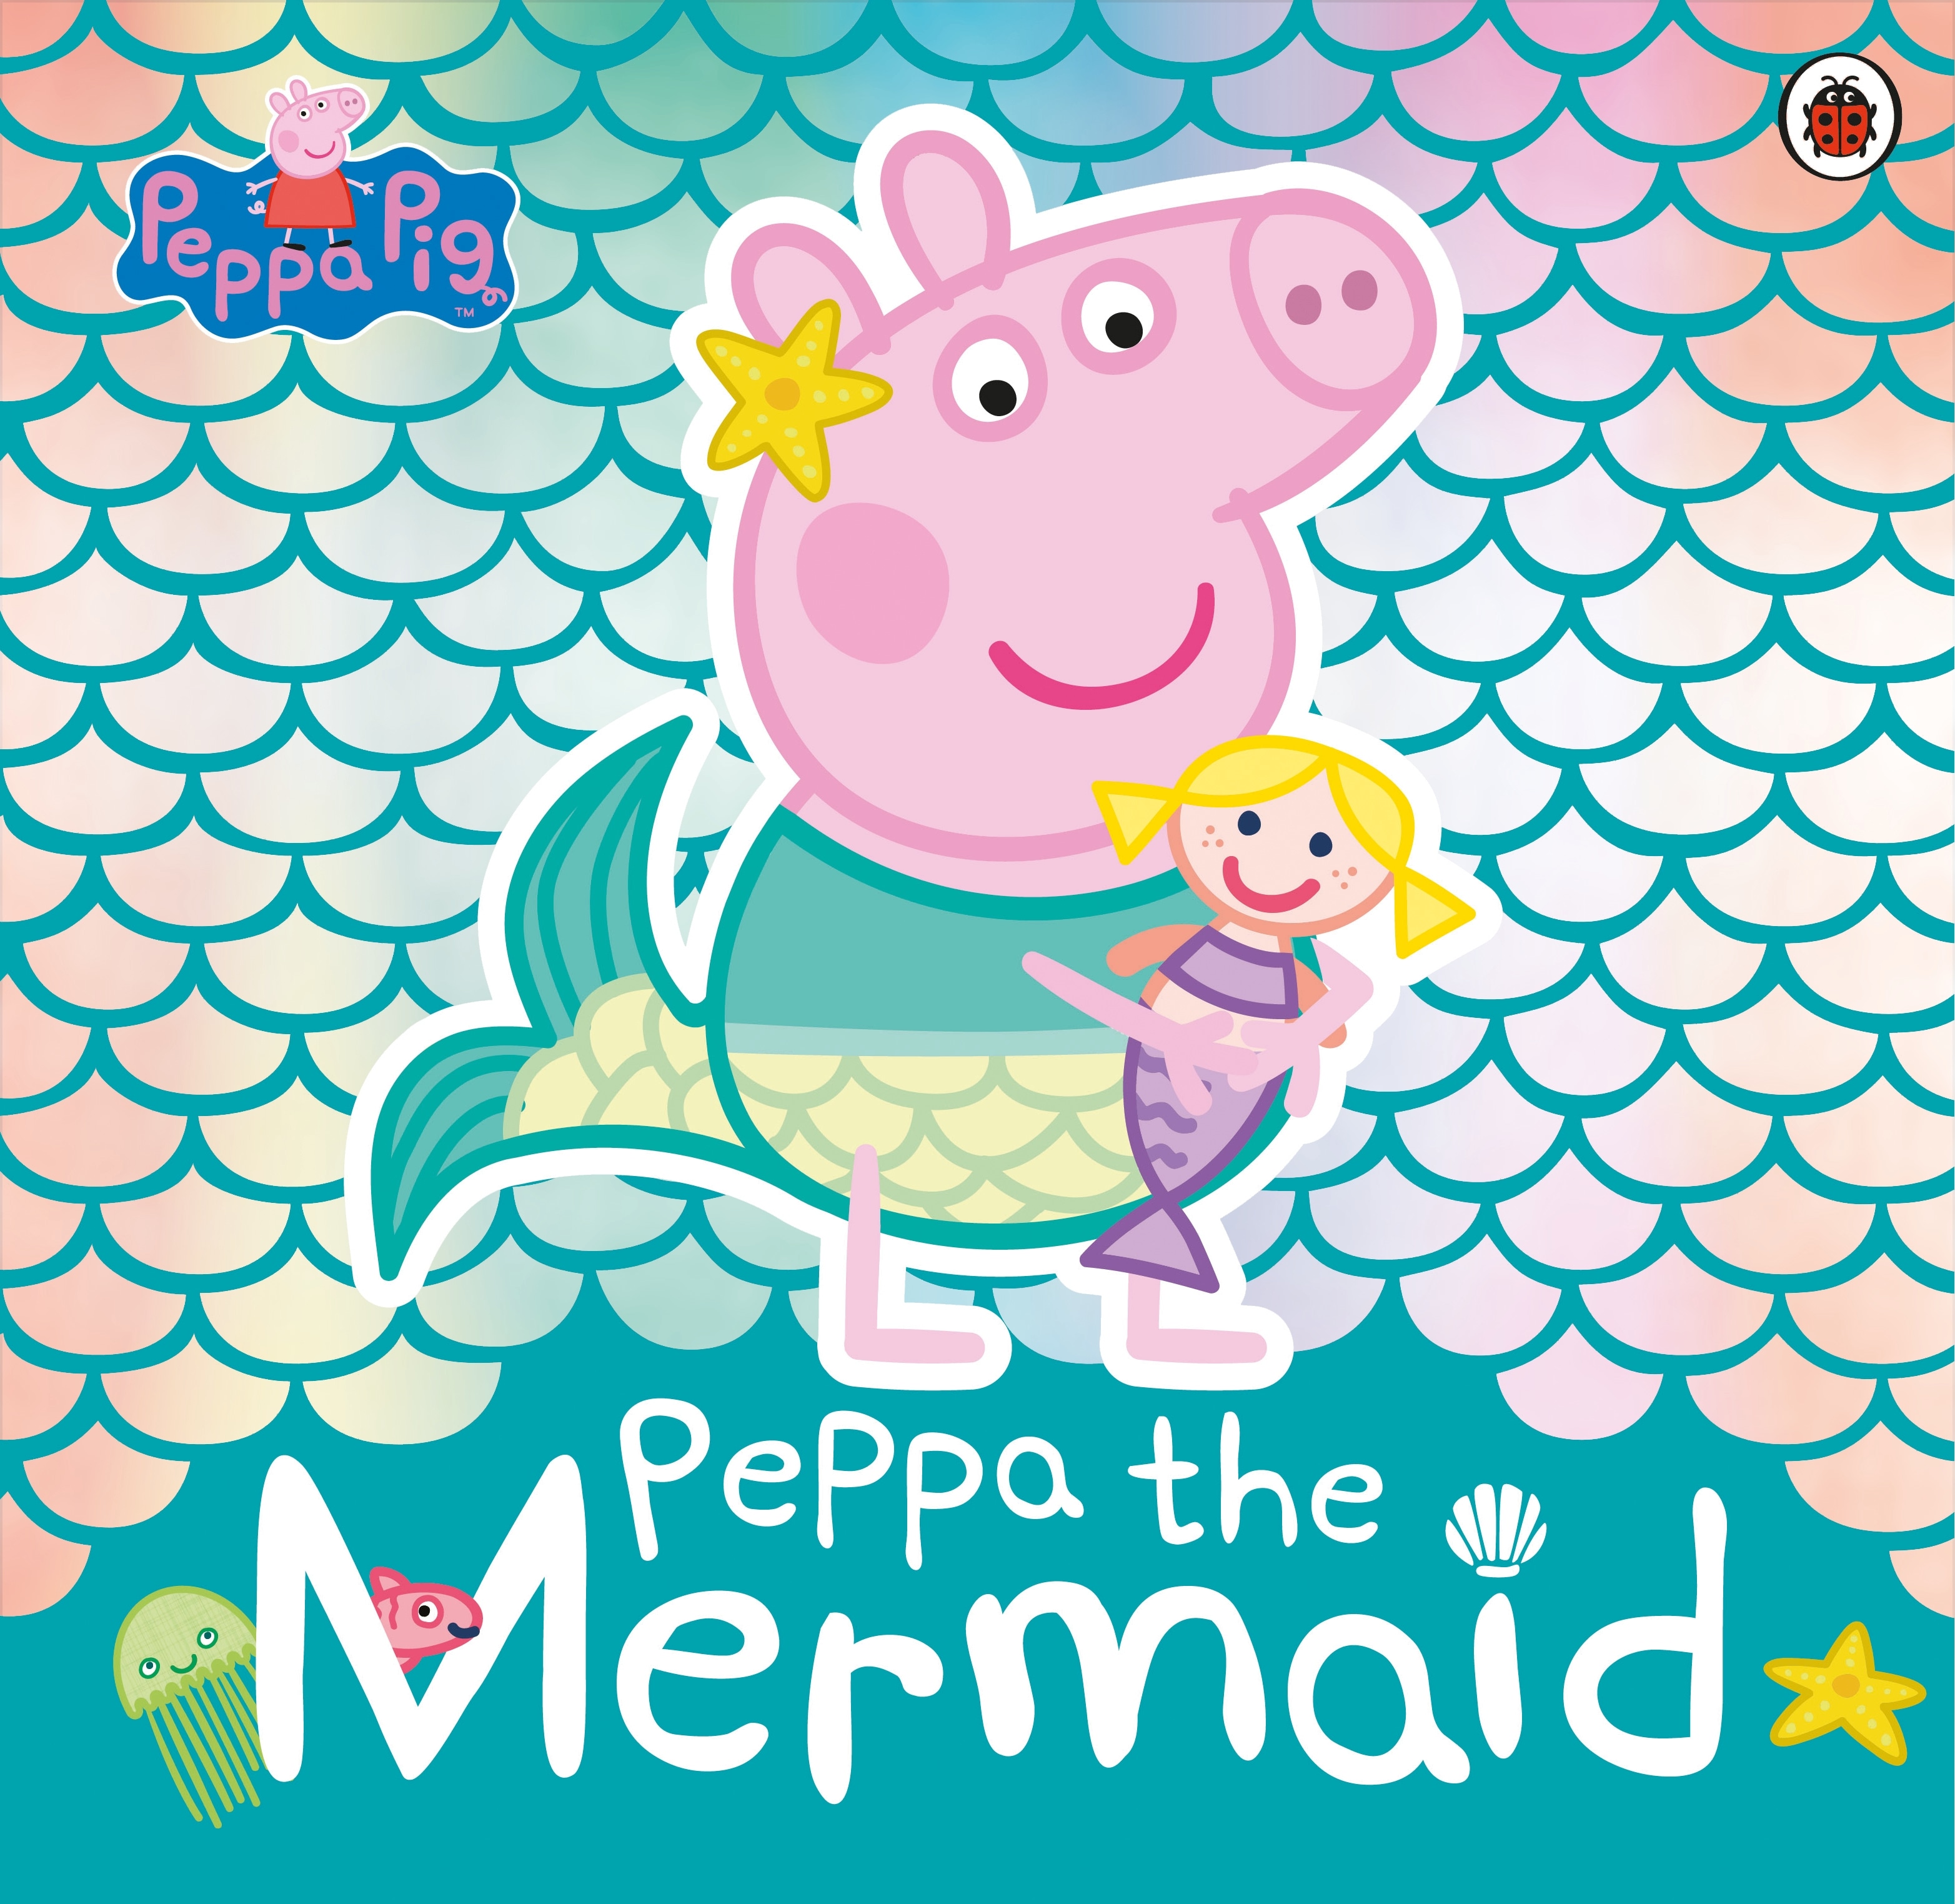 Book “Peppa Pig: Peppa the Mermaid” by Peppa Pig — January 24, 2019